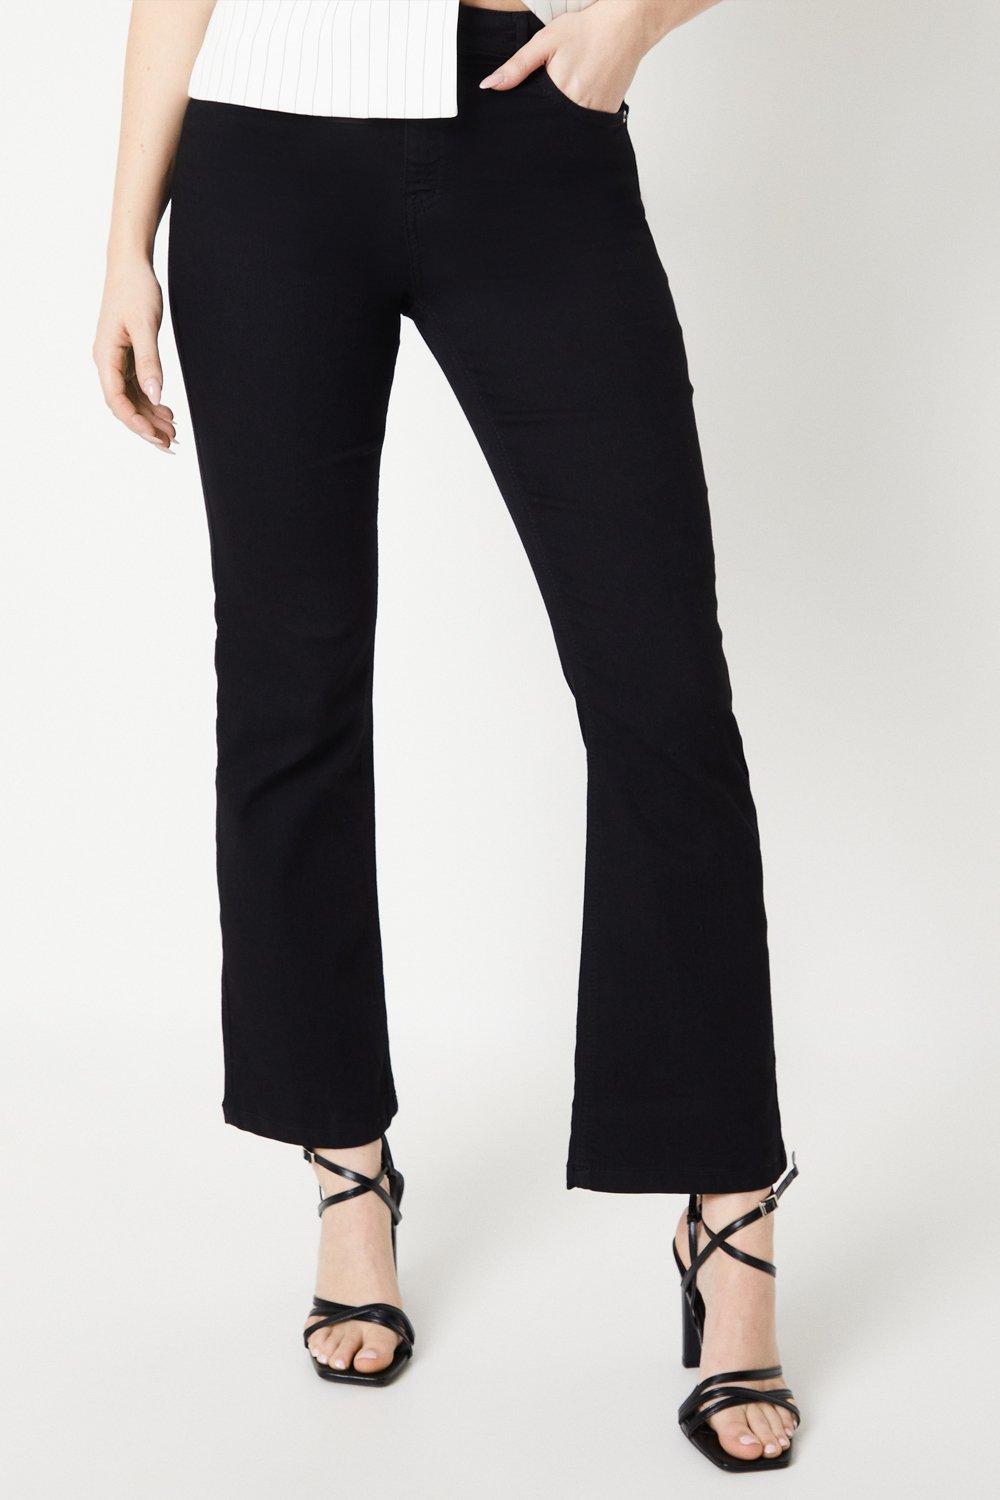 Women’s Comfort Stretch Bootcut Jeans - black - 18